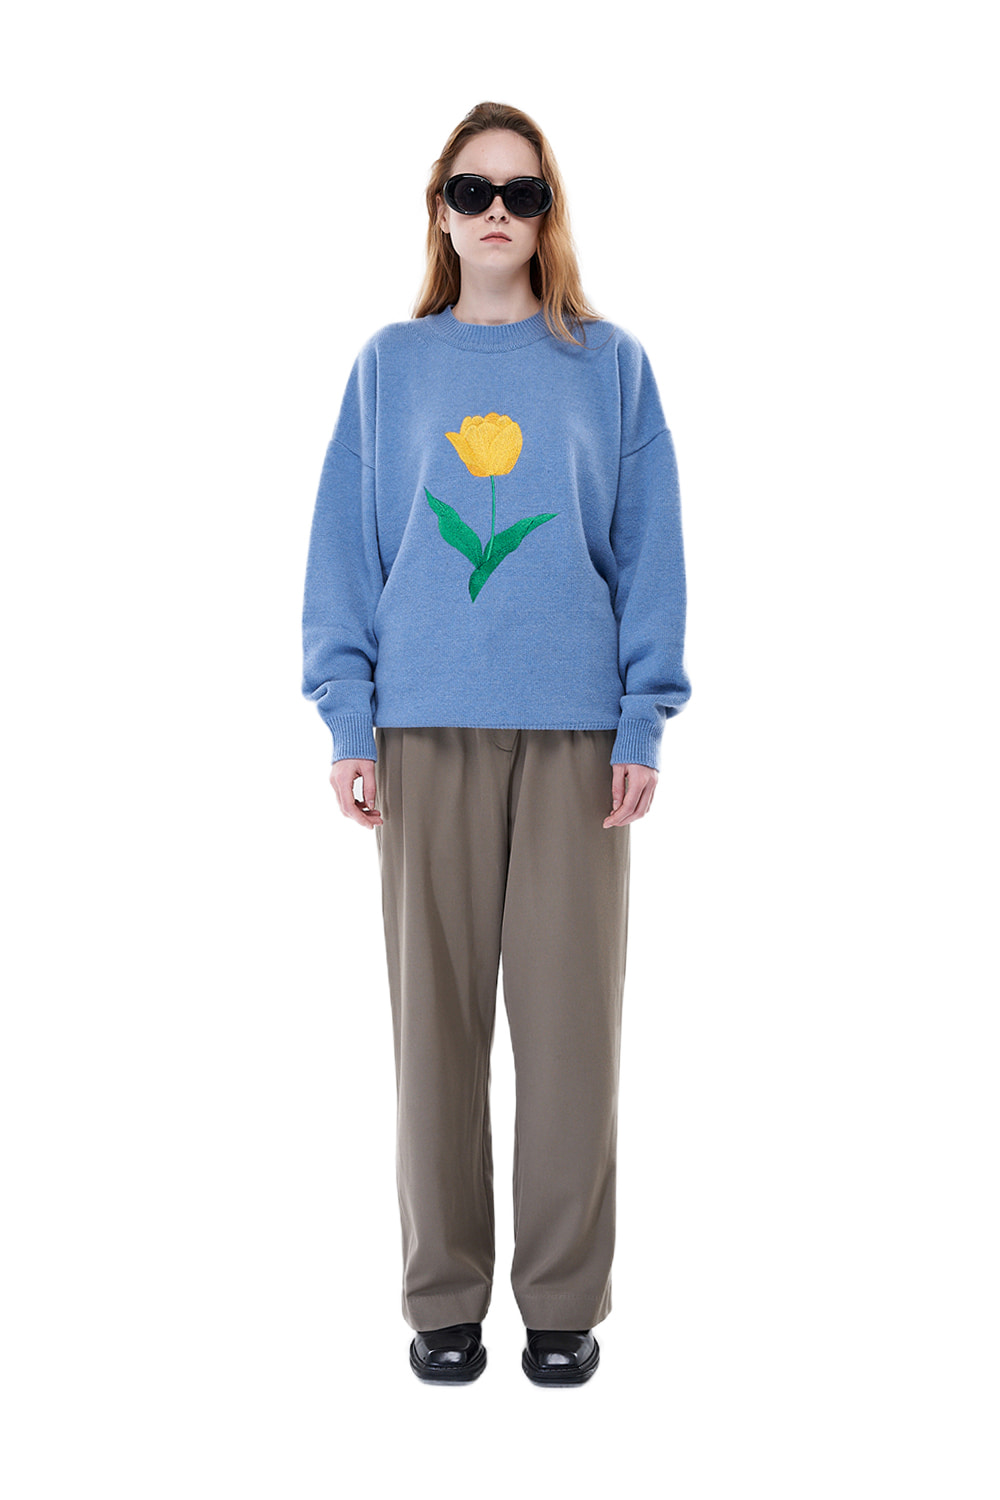 Tulip Cashmere Knit Sweater (Sky Blue)GRAFFITIONMIND